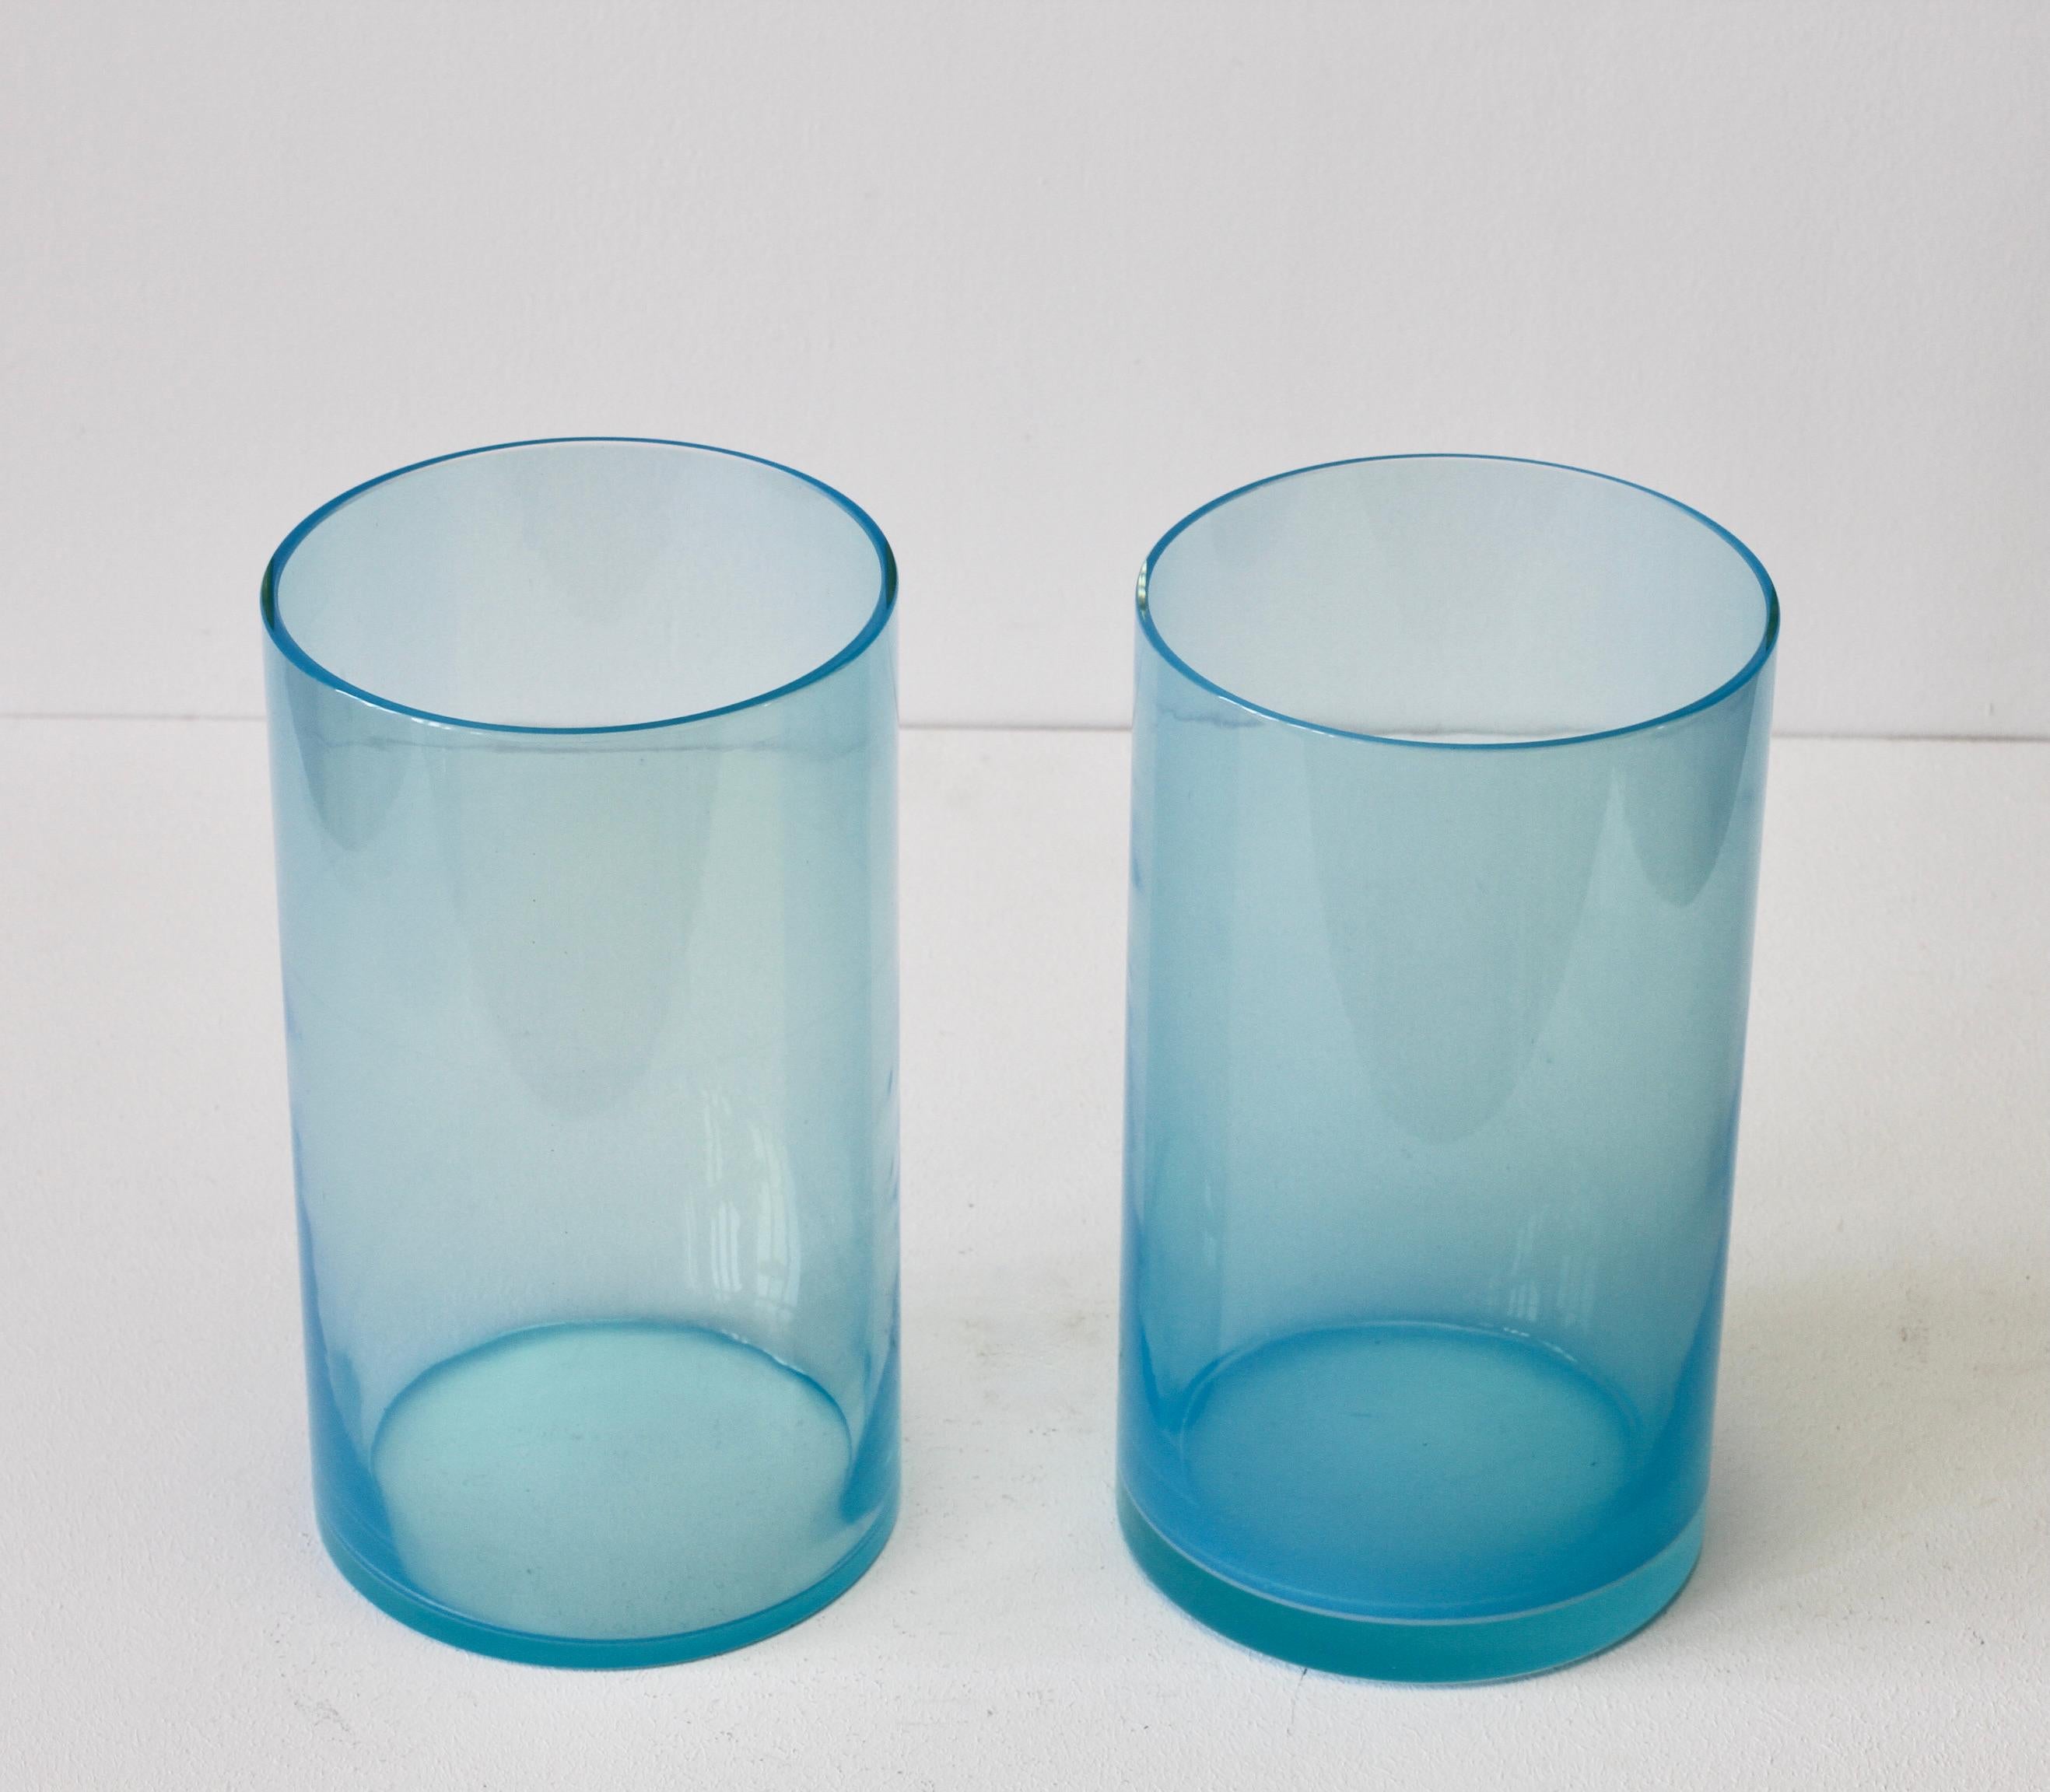 Rare pair of stunning midcentury, vintage 'Opalino' Murano glass vase or vessel designed by Antonio da Ros for Cenedese, circa 1970-1990 Wonderful translucent color (colour) of vibrant light 